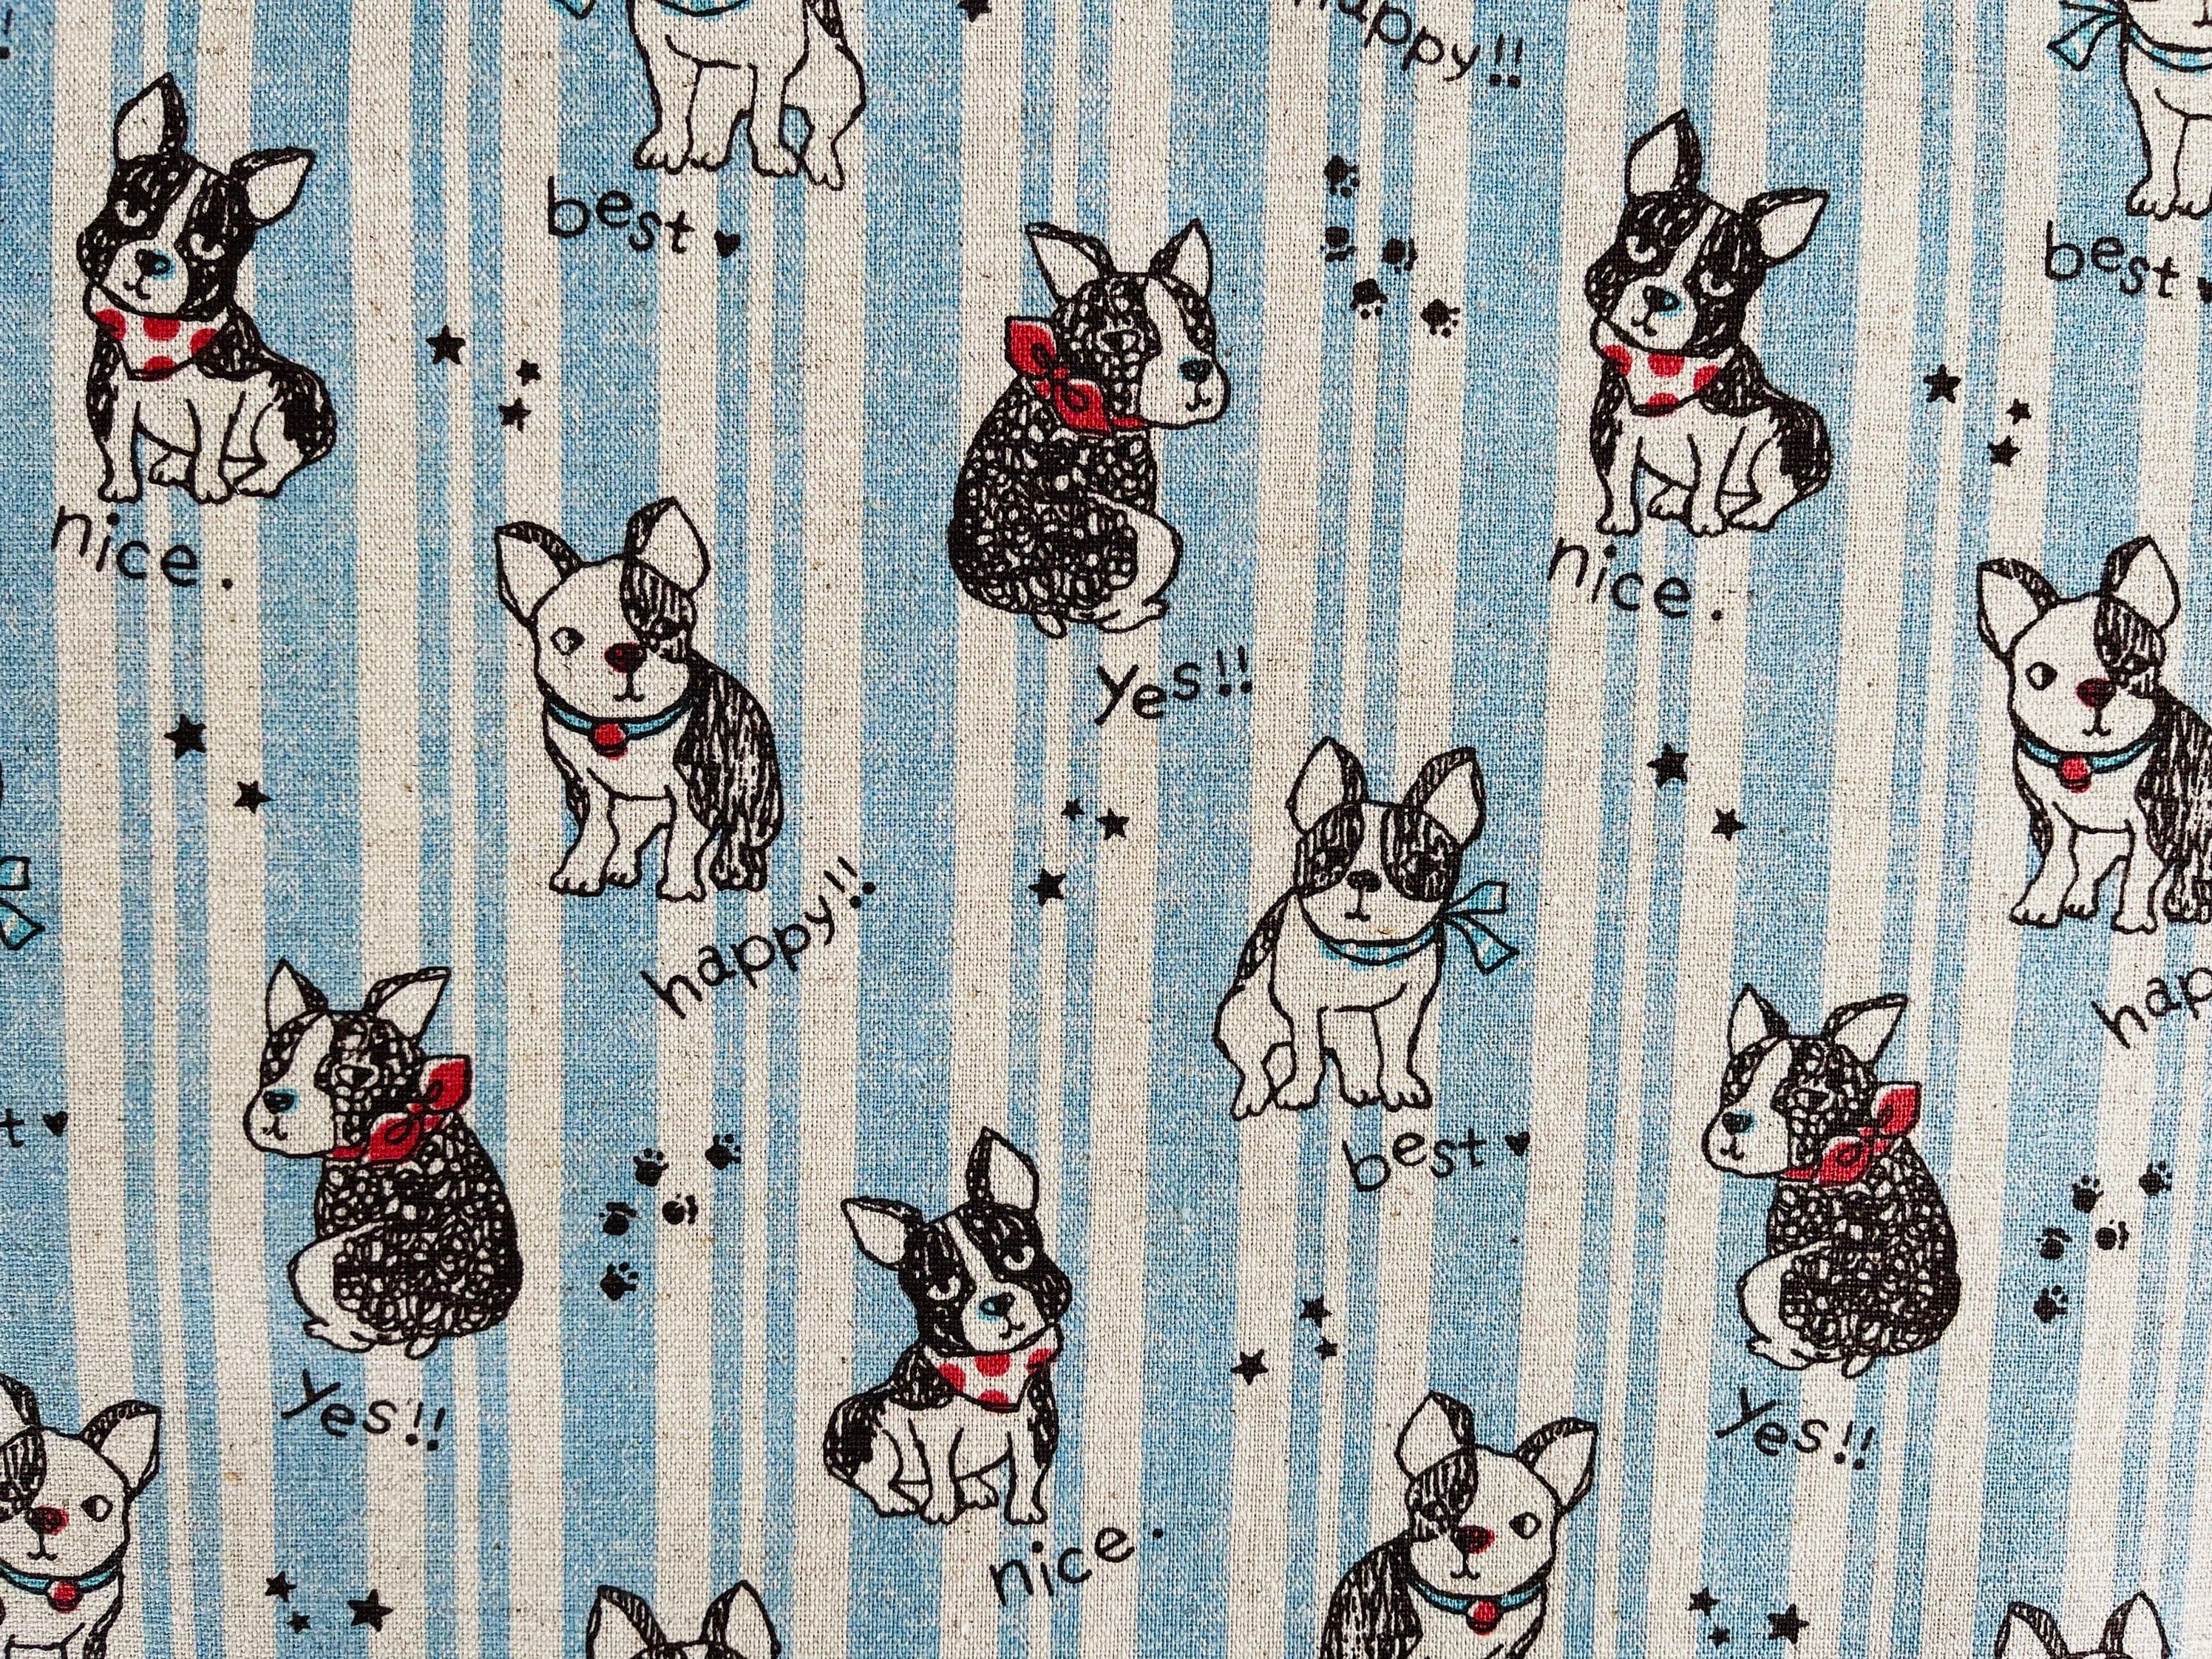 Japanese  Fabric - Kokka - Dog - Bulldog Fabric - Cotton Linen - Lightweight Canvas - Gray - Red - Black - Blue - LOA-51050-2A12